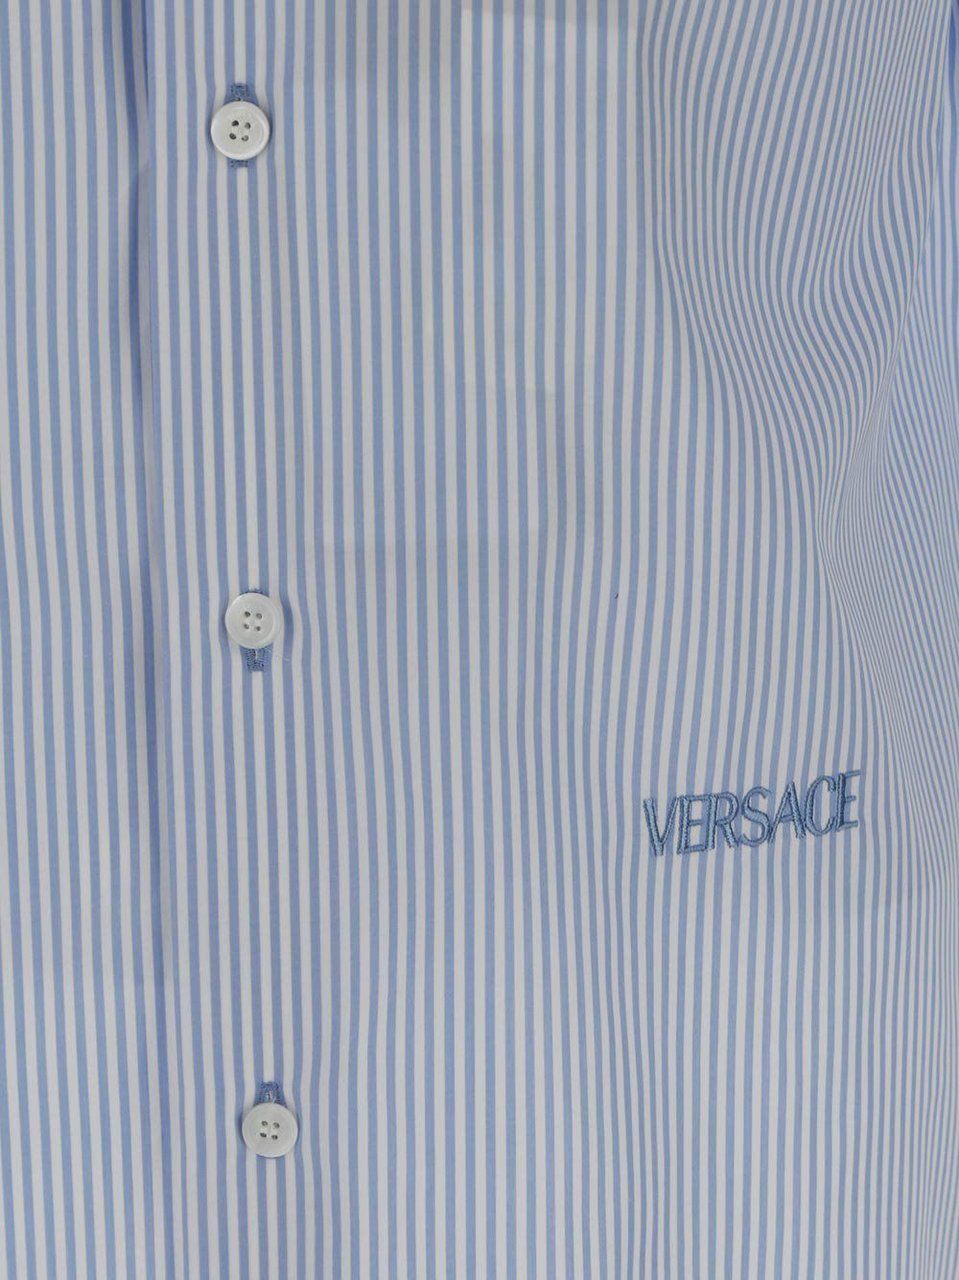 Versace Striped Informal Shirt Divers